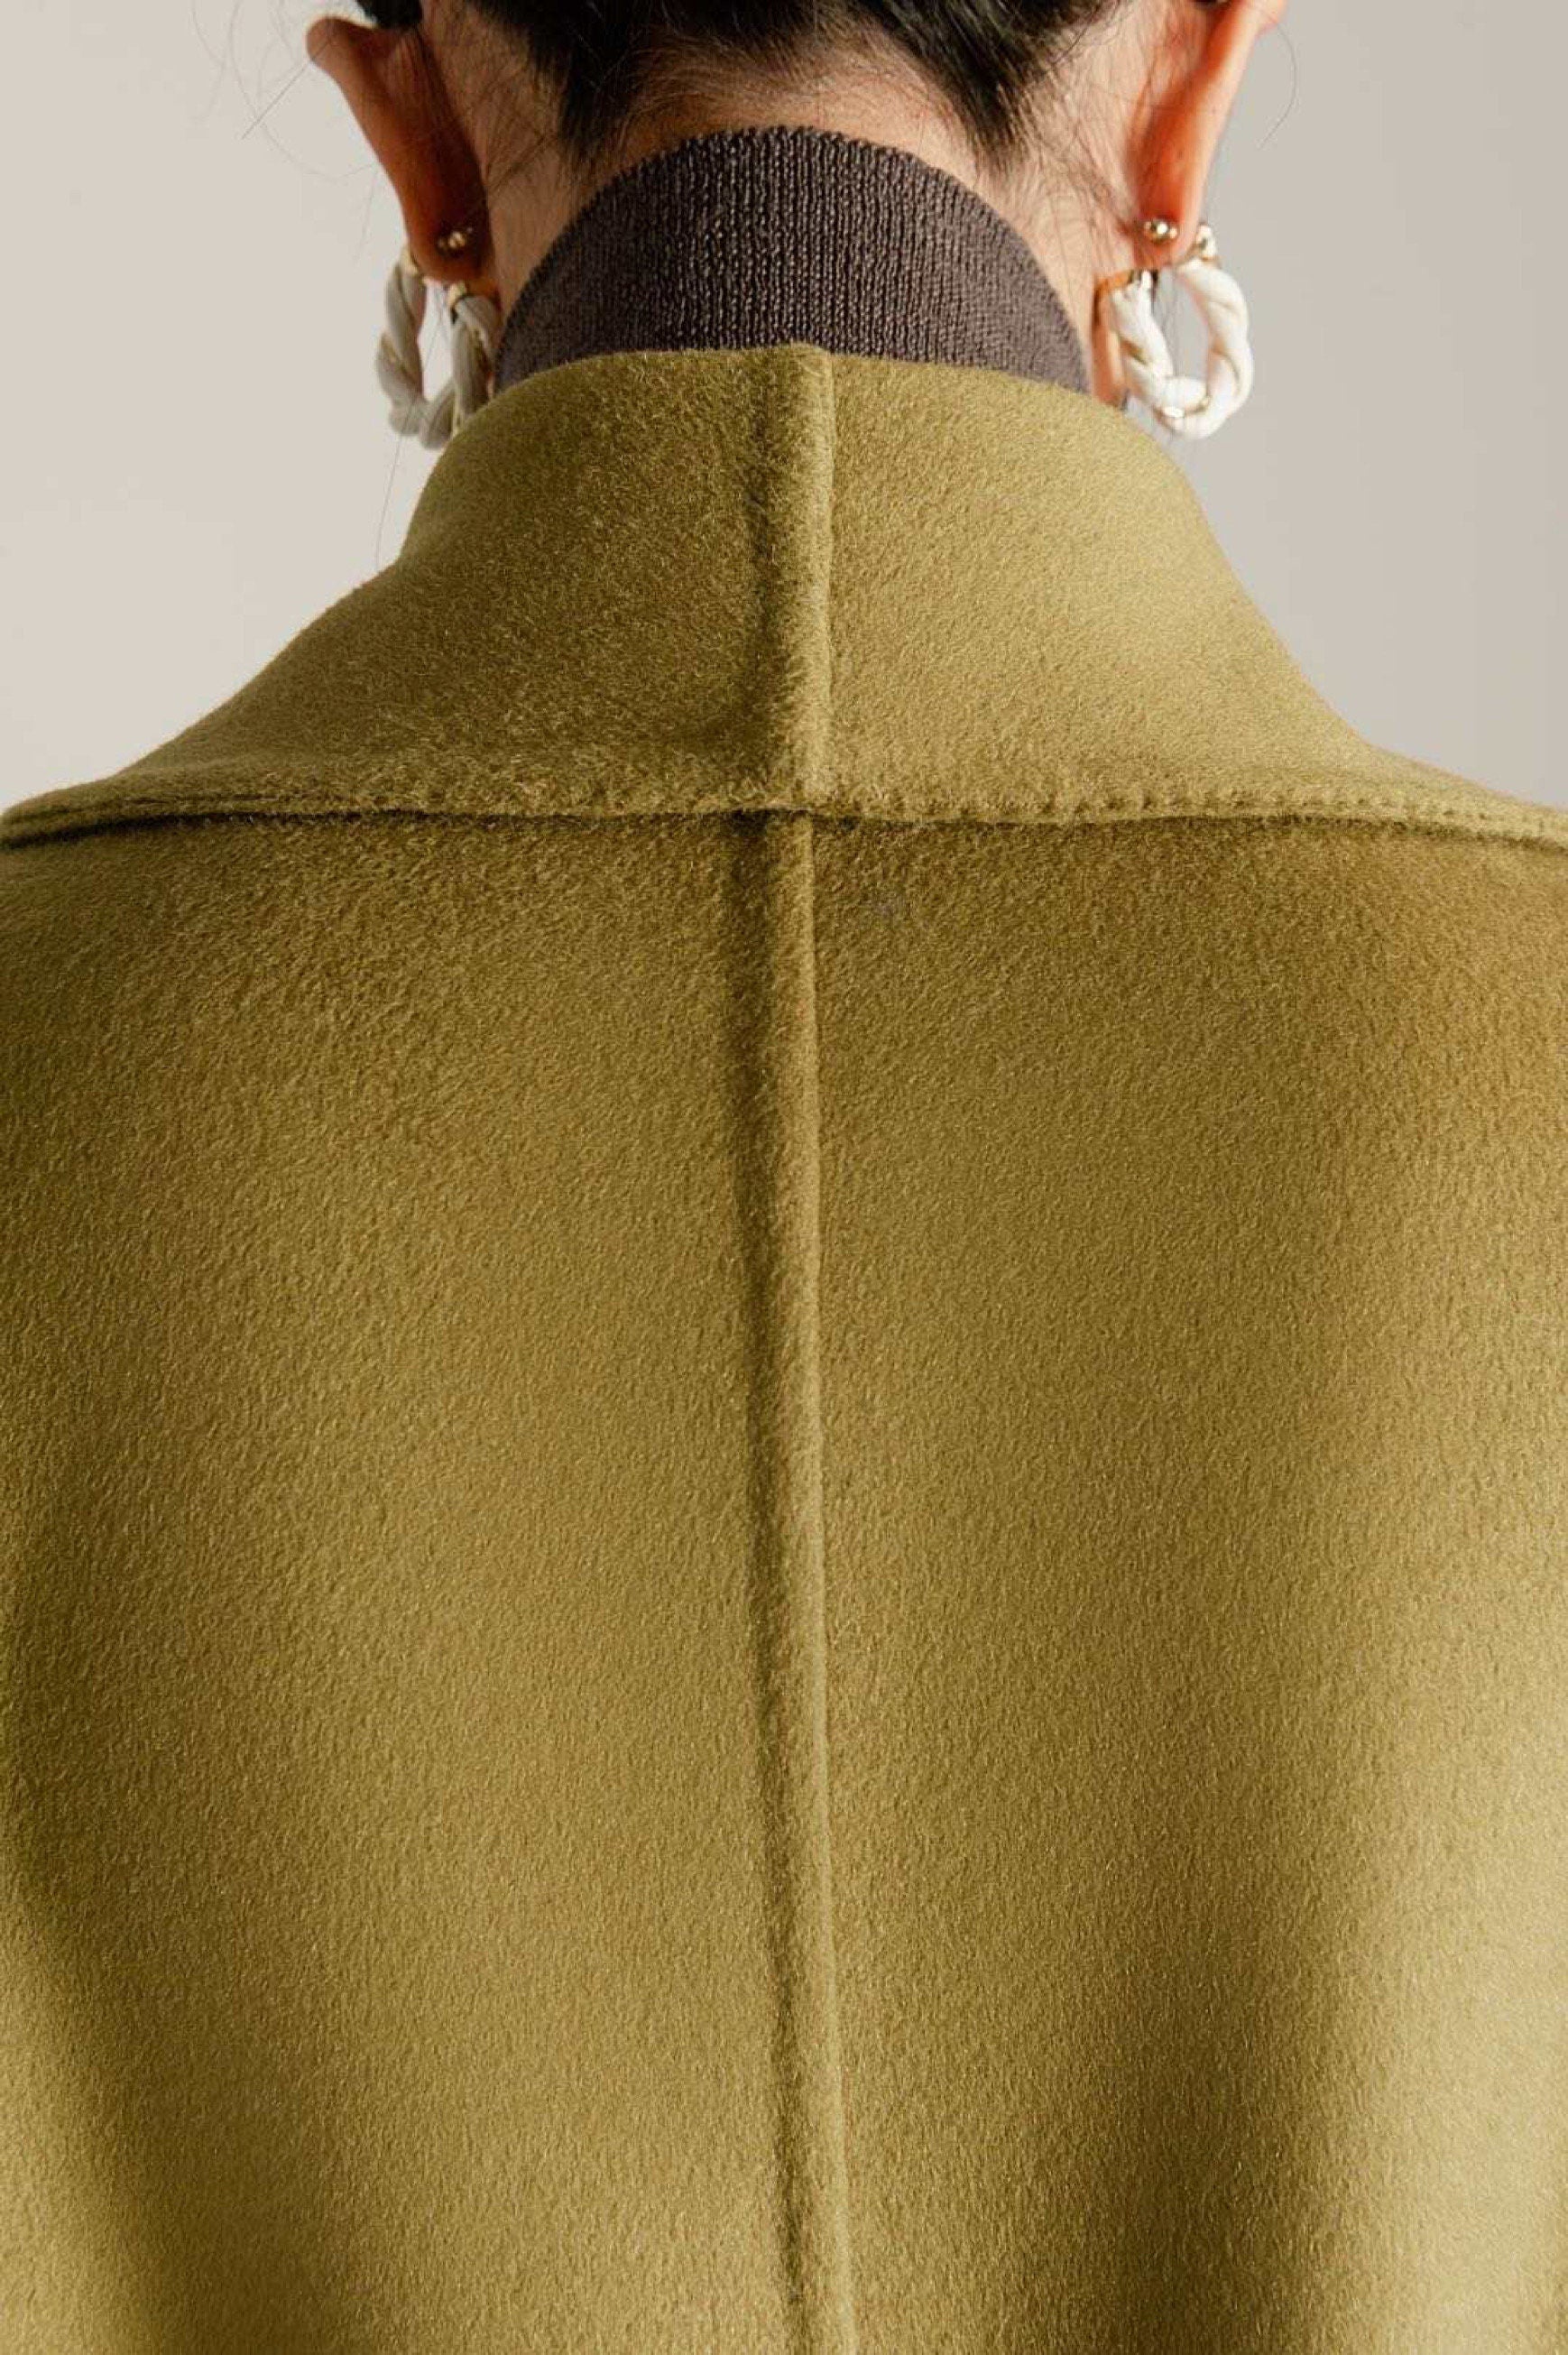 100% Australian Wool Merino long coat